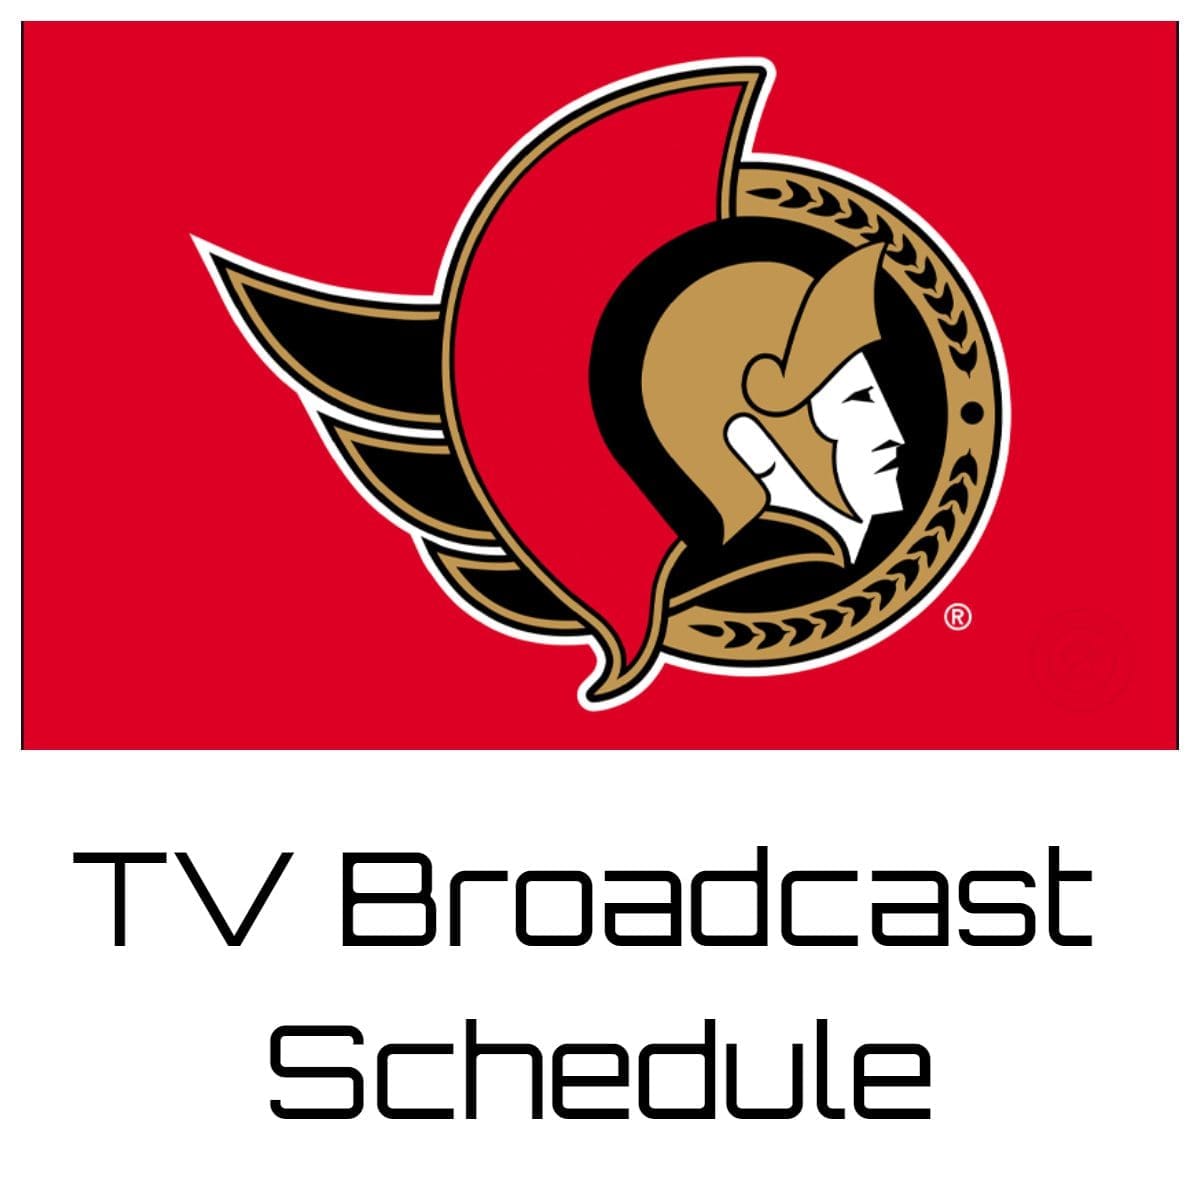 Ottawa Senators TV Broadcast Schedule